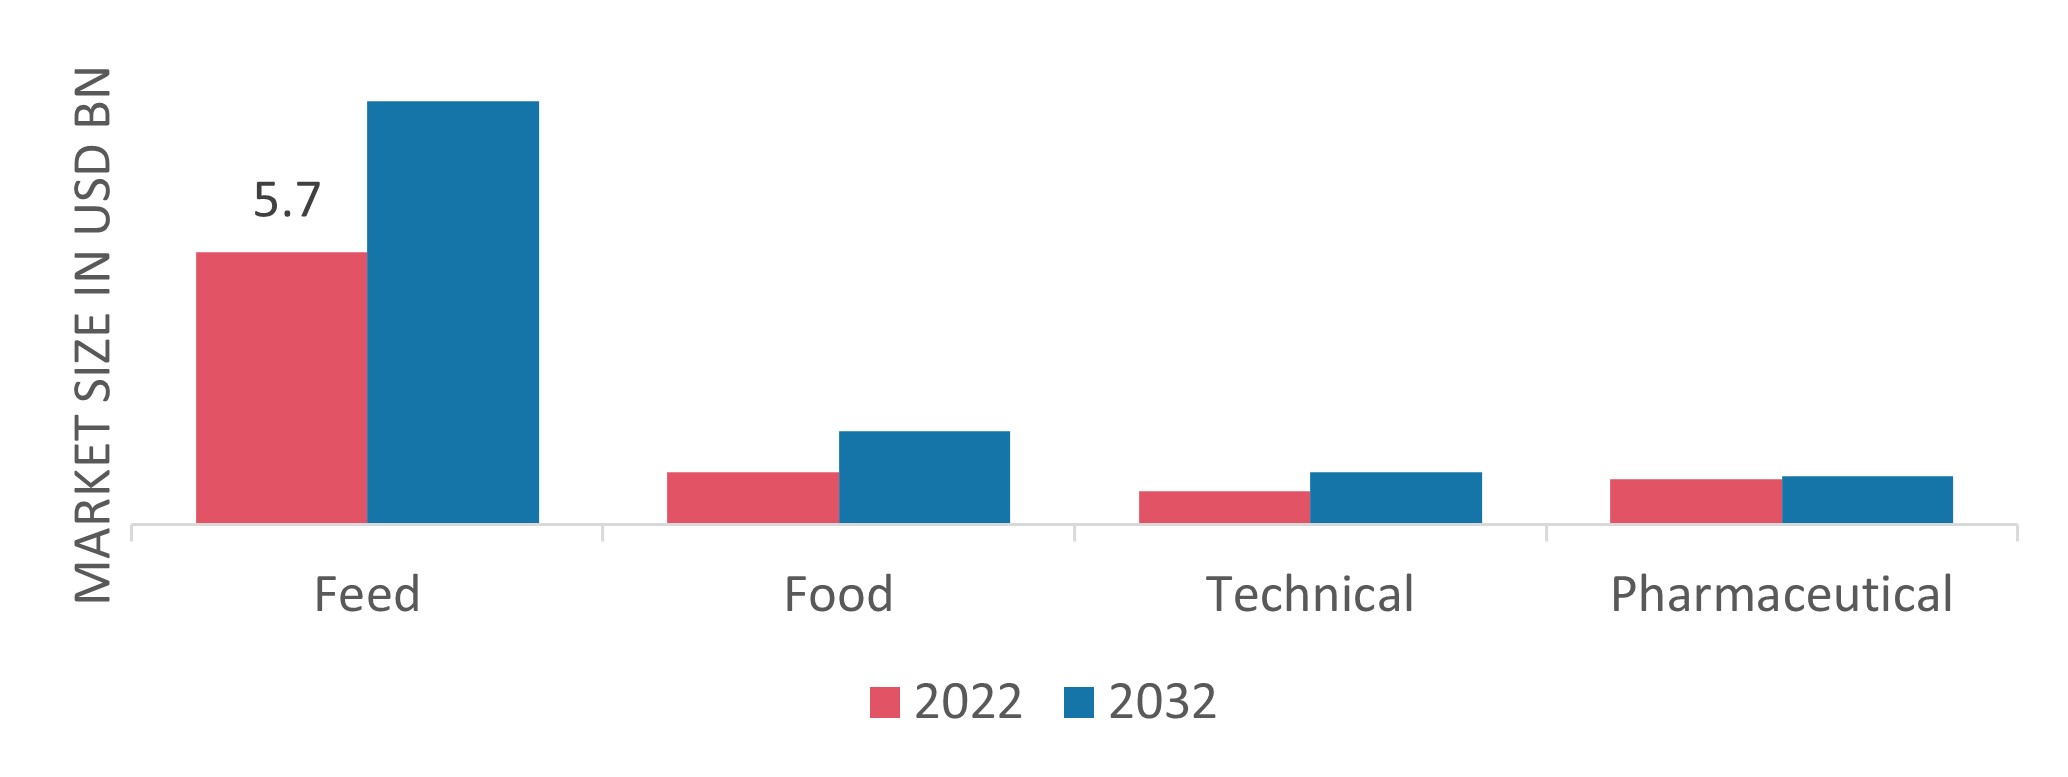 Sodium Bicarbonate Market, by Grade, 2022&2032